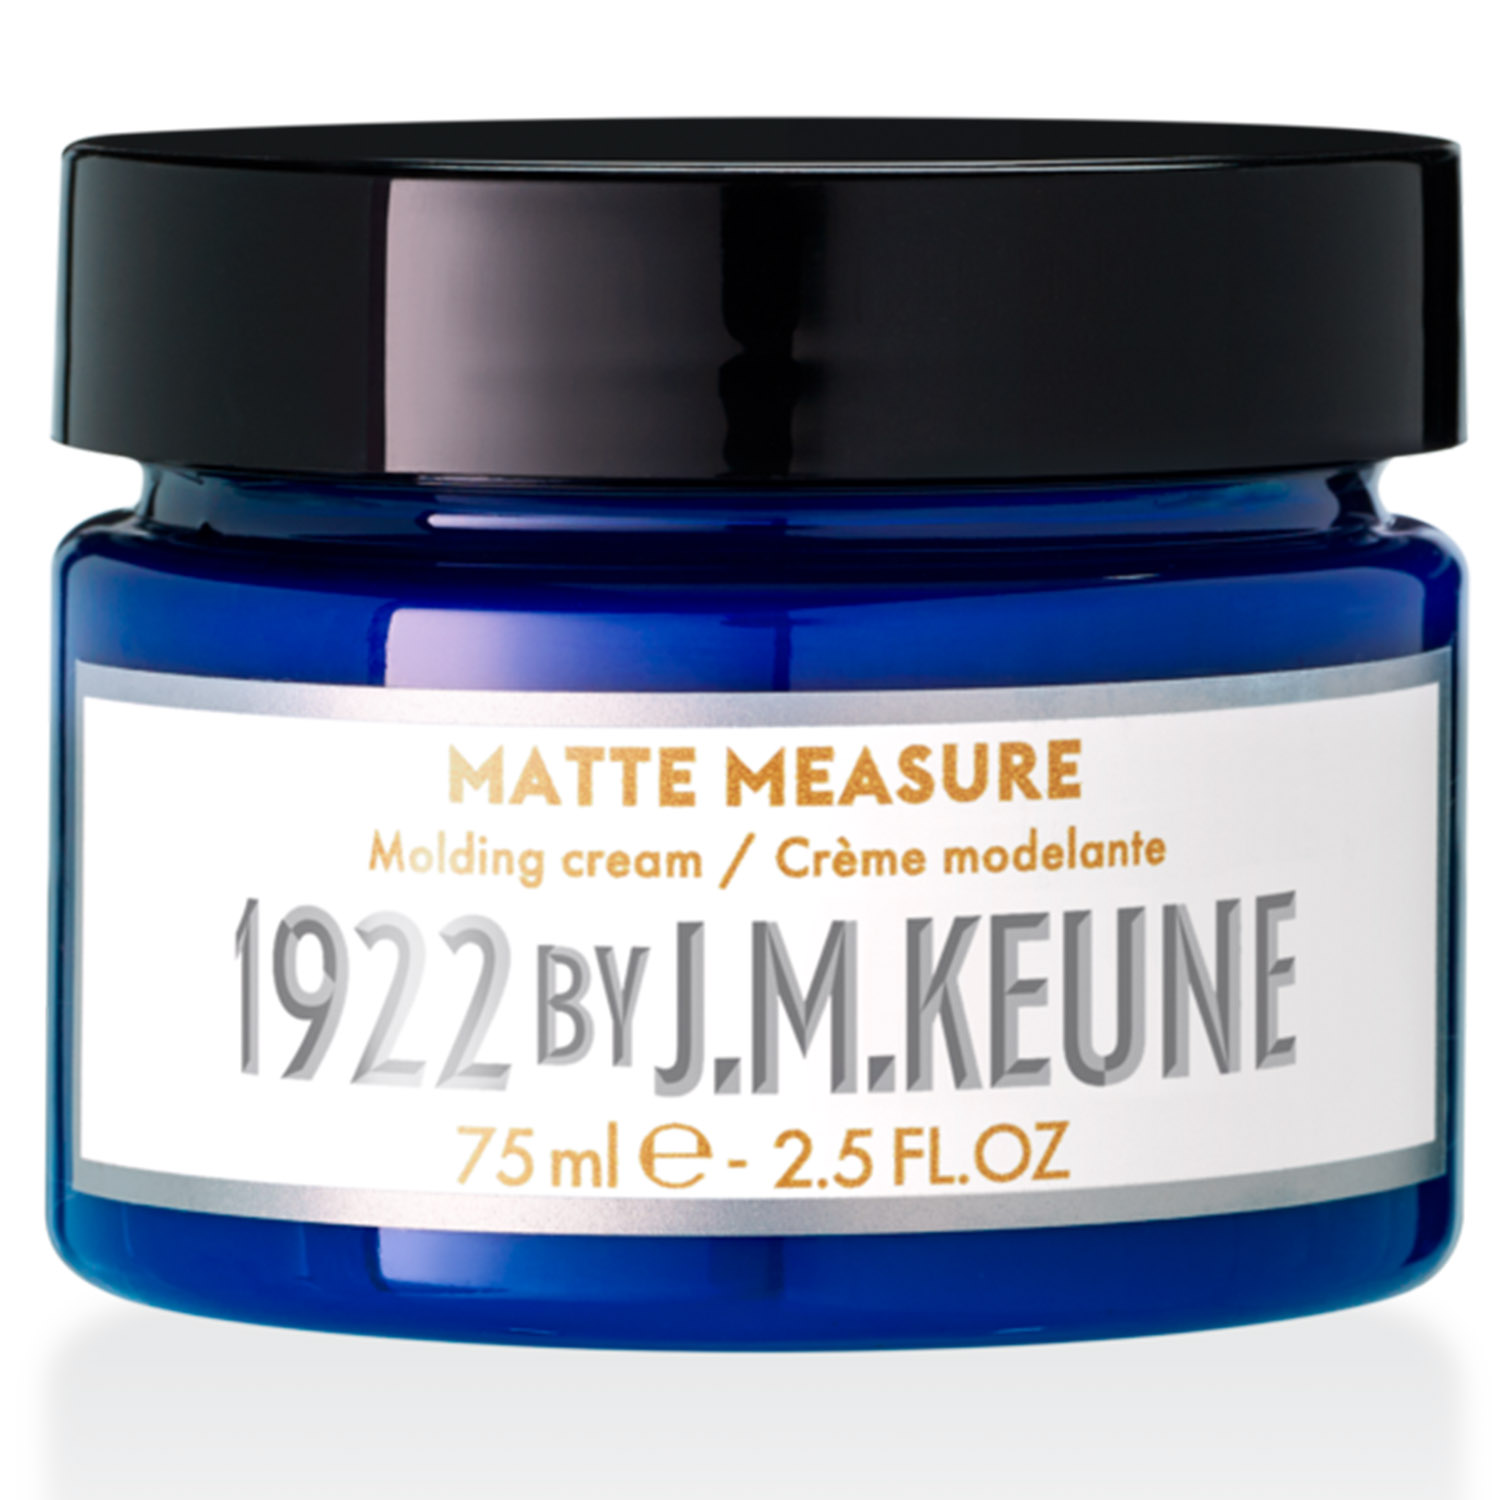 Keune Матирующий крем для укладки волос Matter Measure, 75 мл (Keune, 1922 by J.M. Keune)